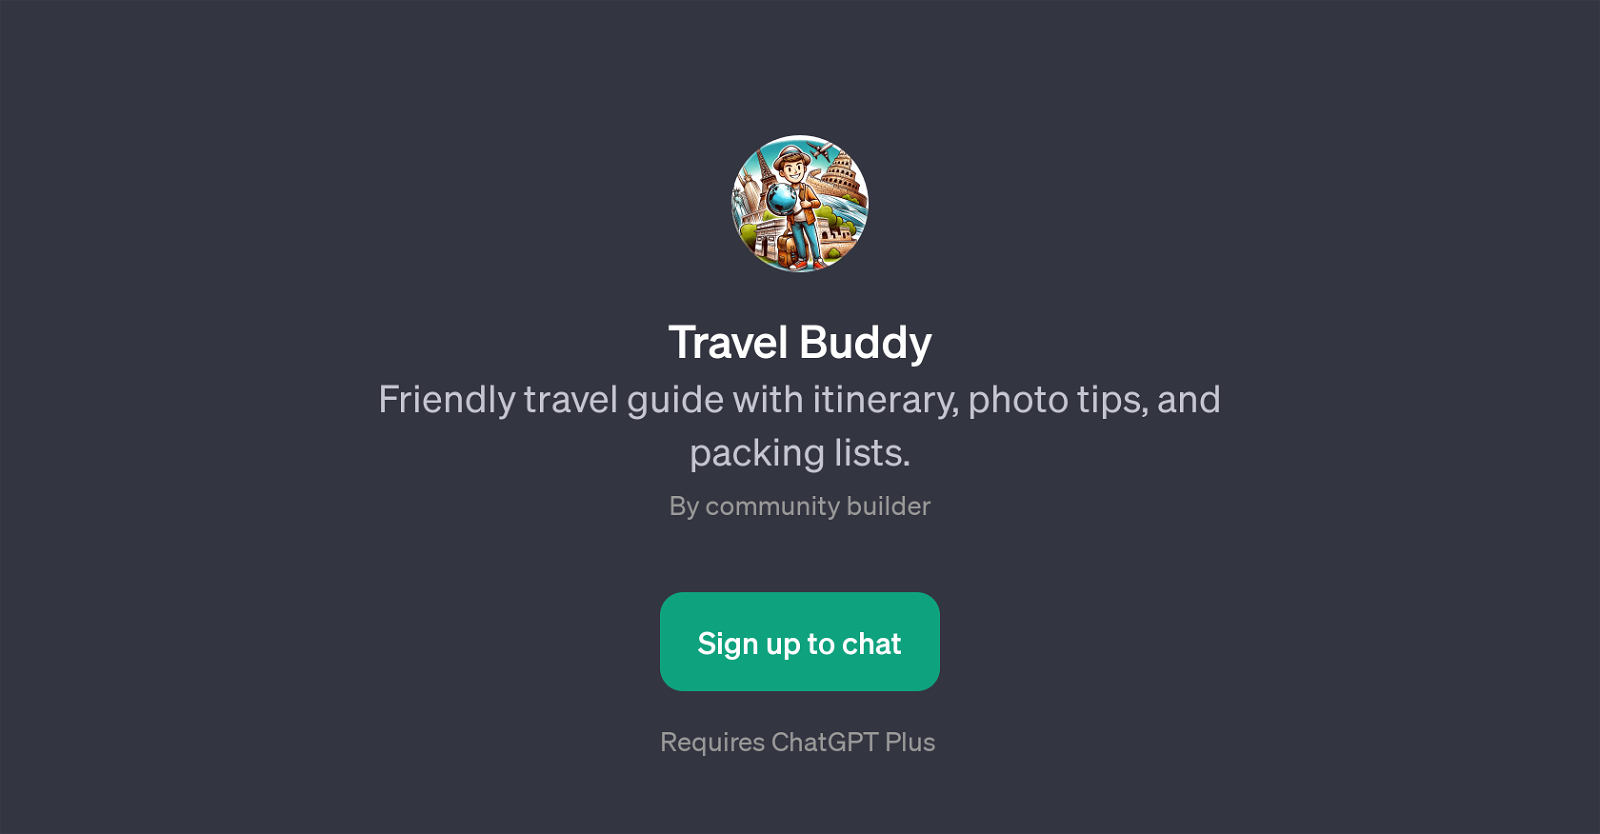 Travel Buddy website